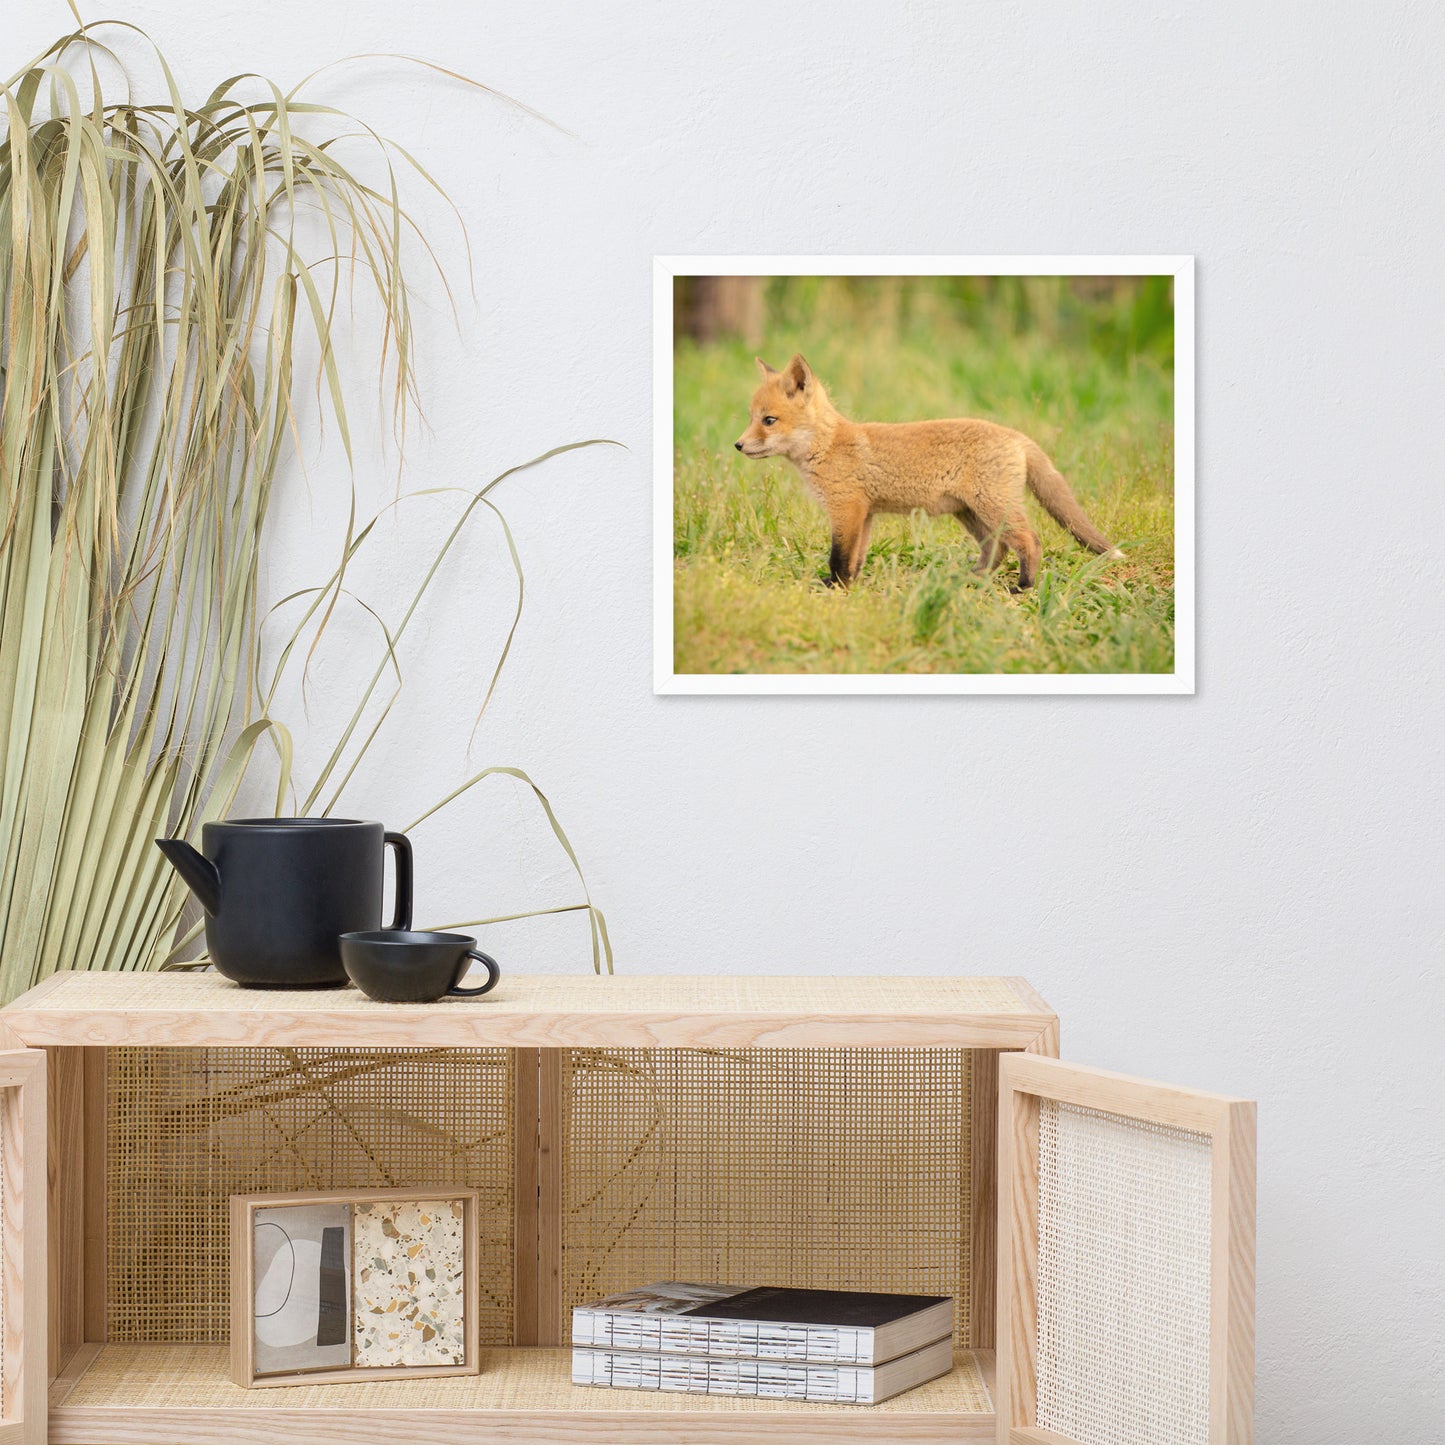 Nursery Wall Art: Baby Fox Pup In Meadow/ Animal / Wildlife / Nature Photographic Artwork - Framed Artwork - Wall Decor